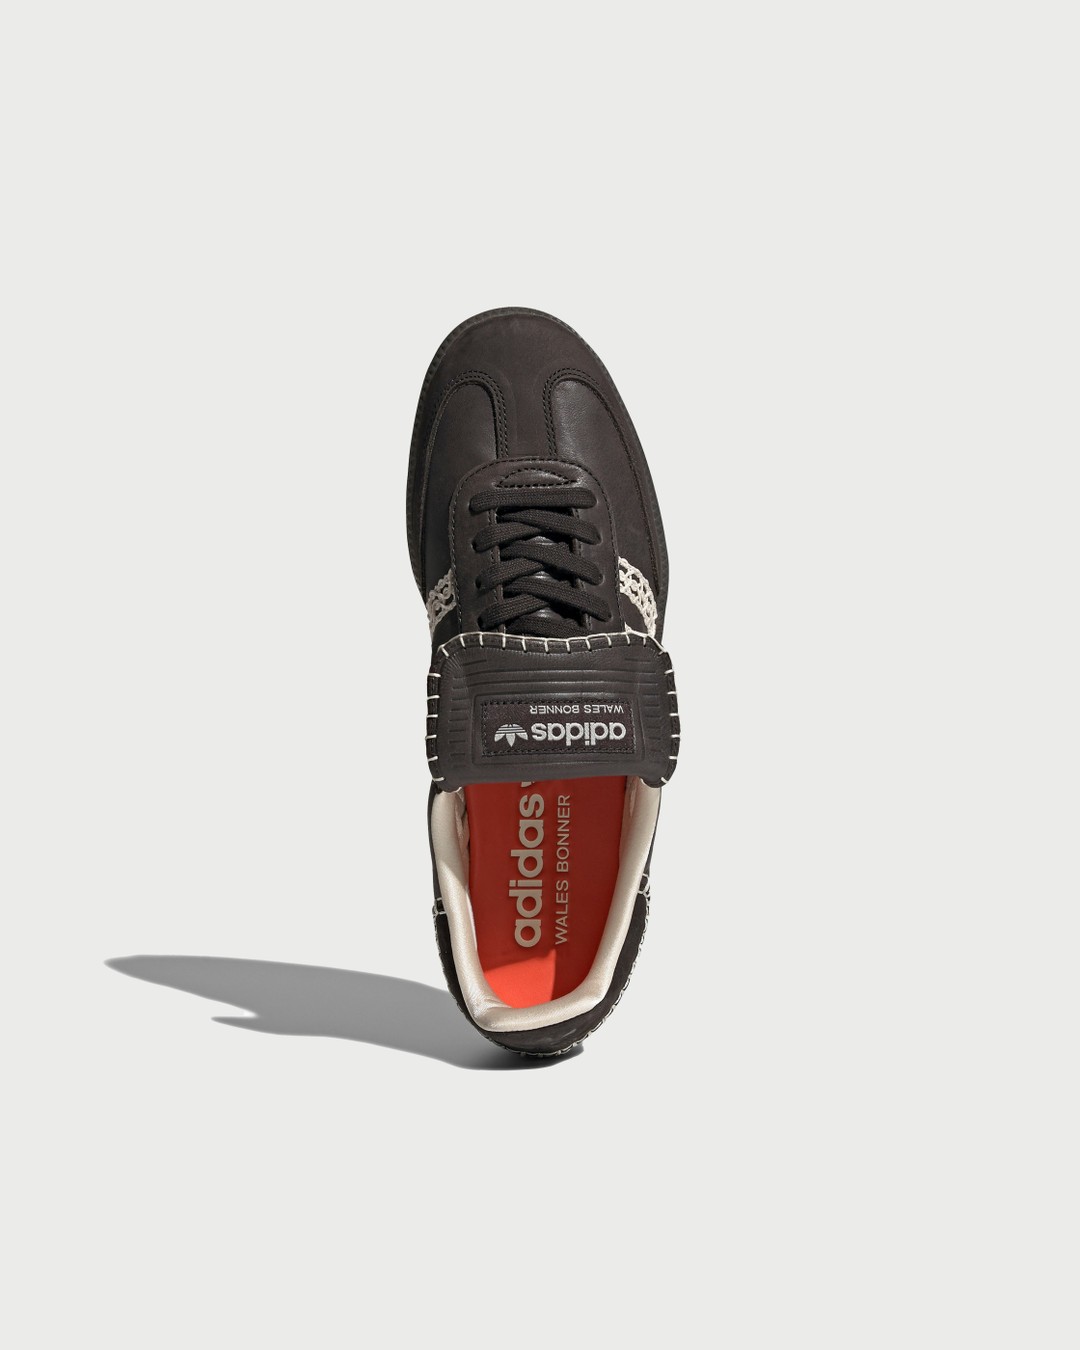 Adidas x Wales Bonner – Samba Black - Sneakers - Black - Image 4